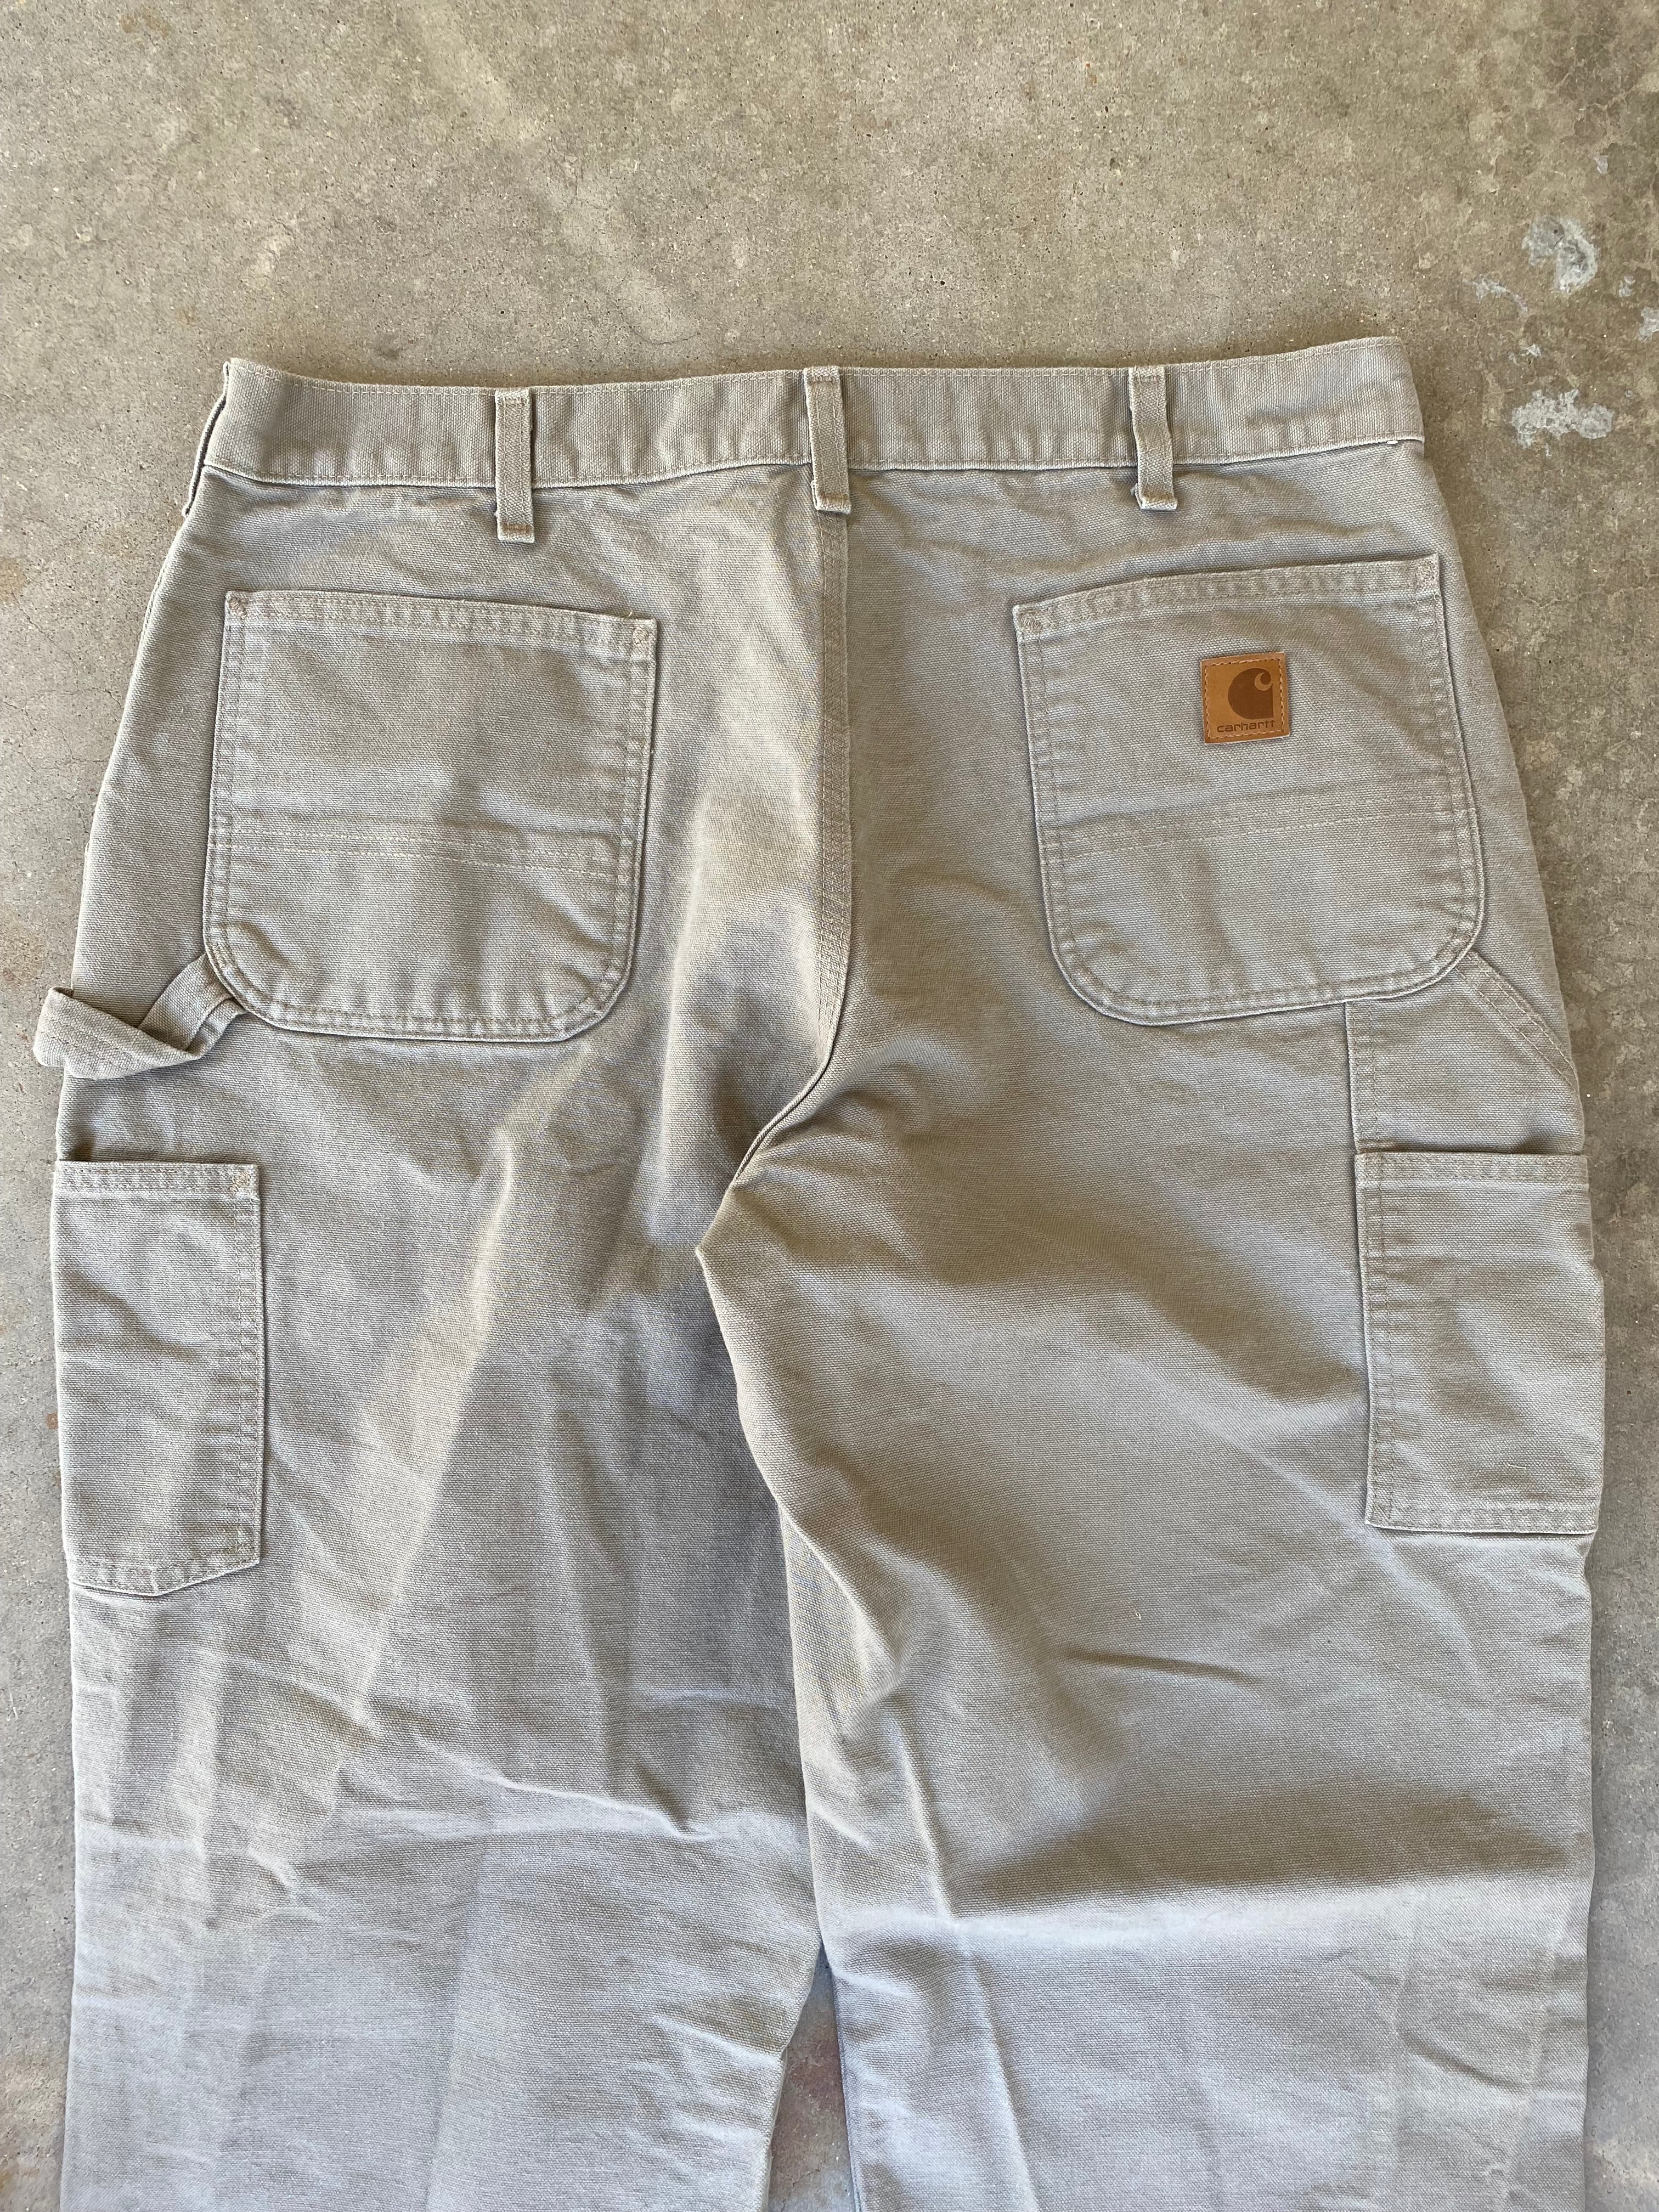 Carhartt Grey Canvas Carpenter Pants (37"x29.5")